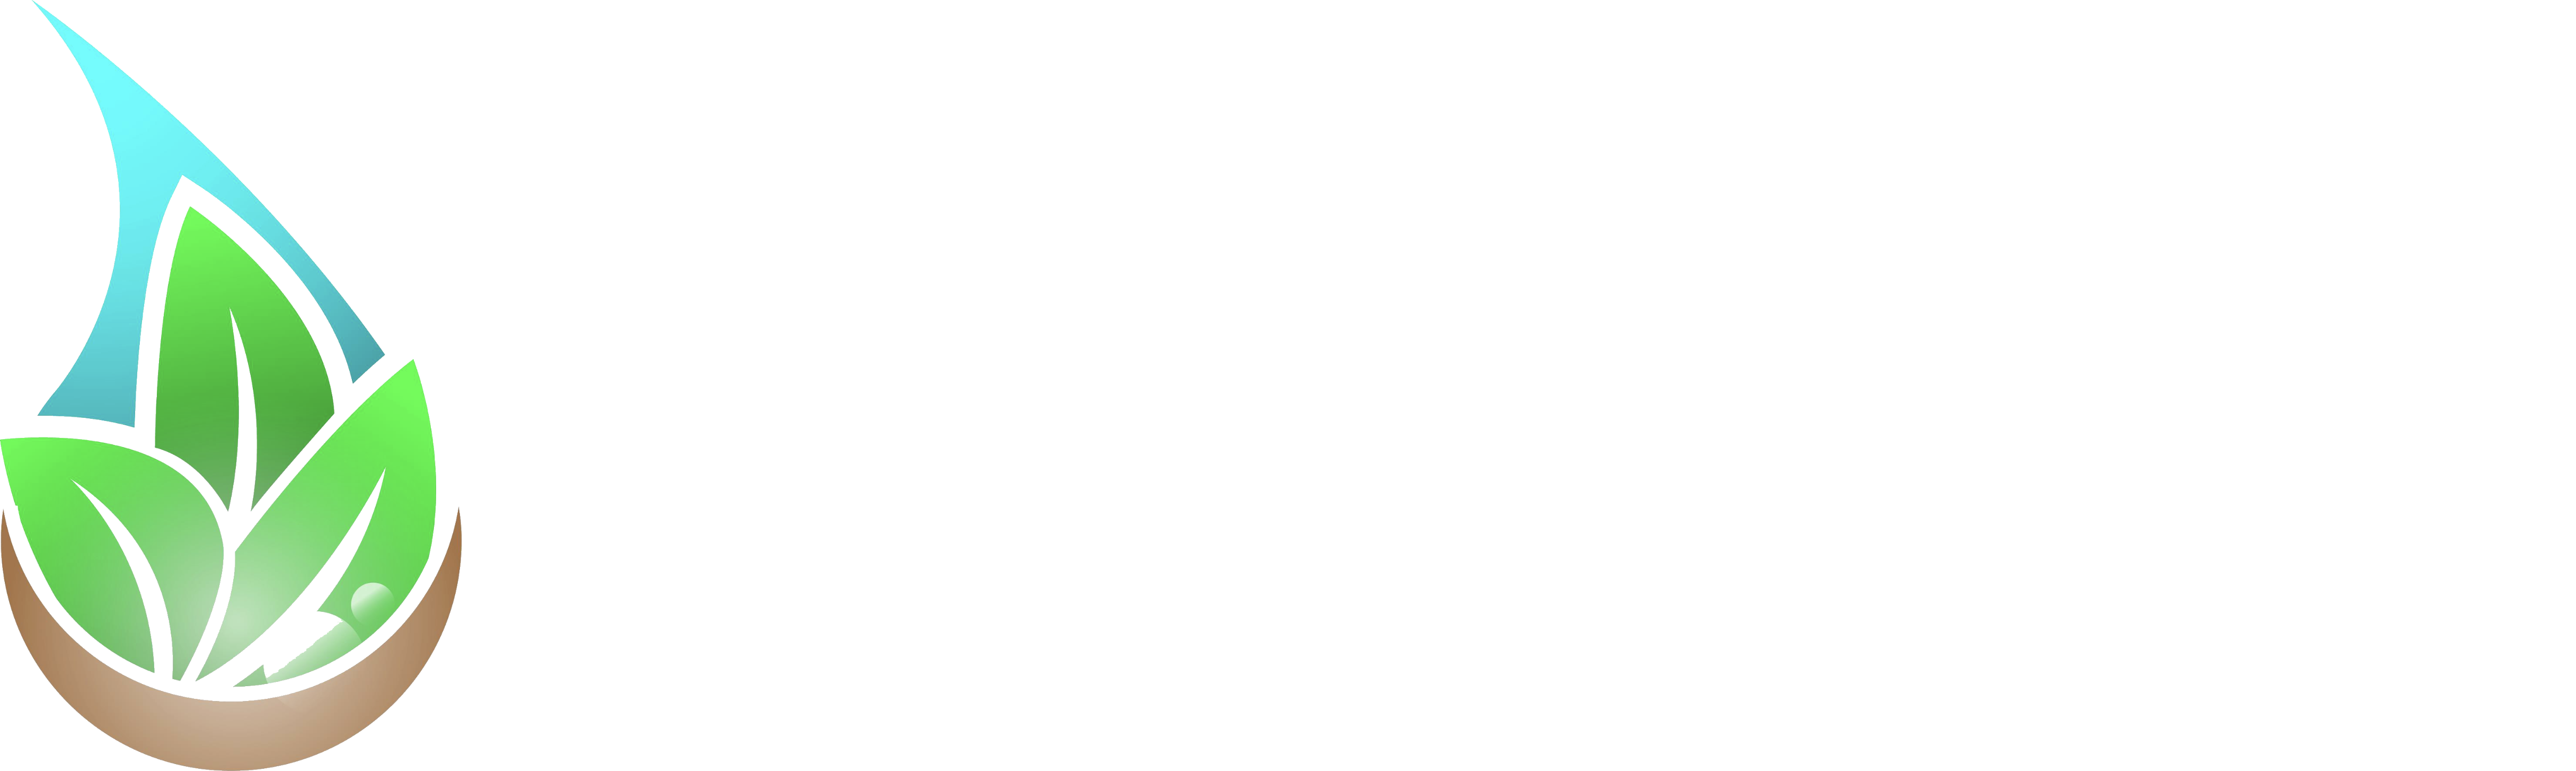 A-Team Corp logo